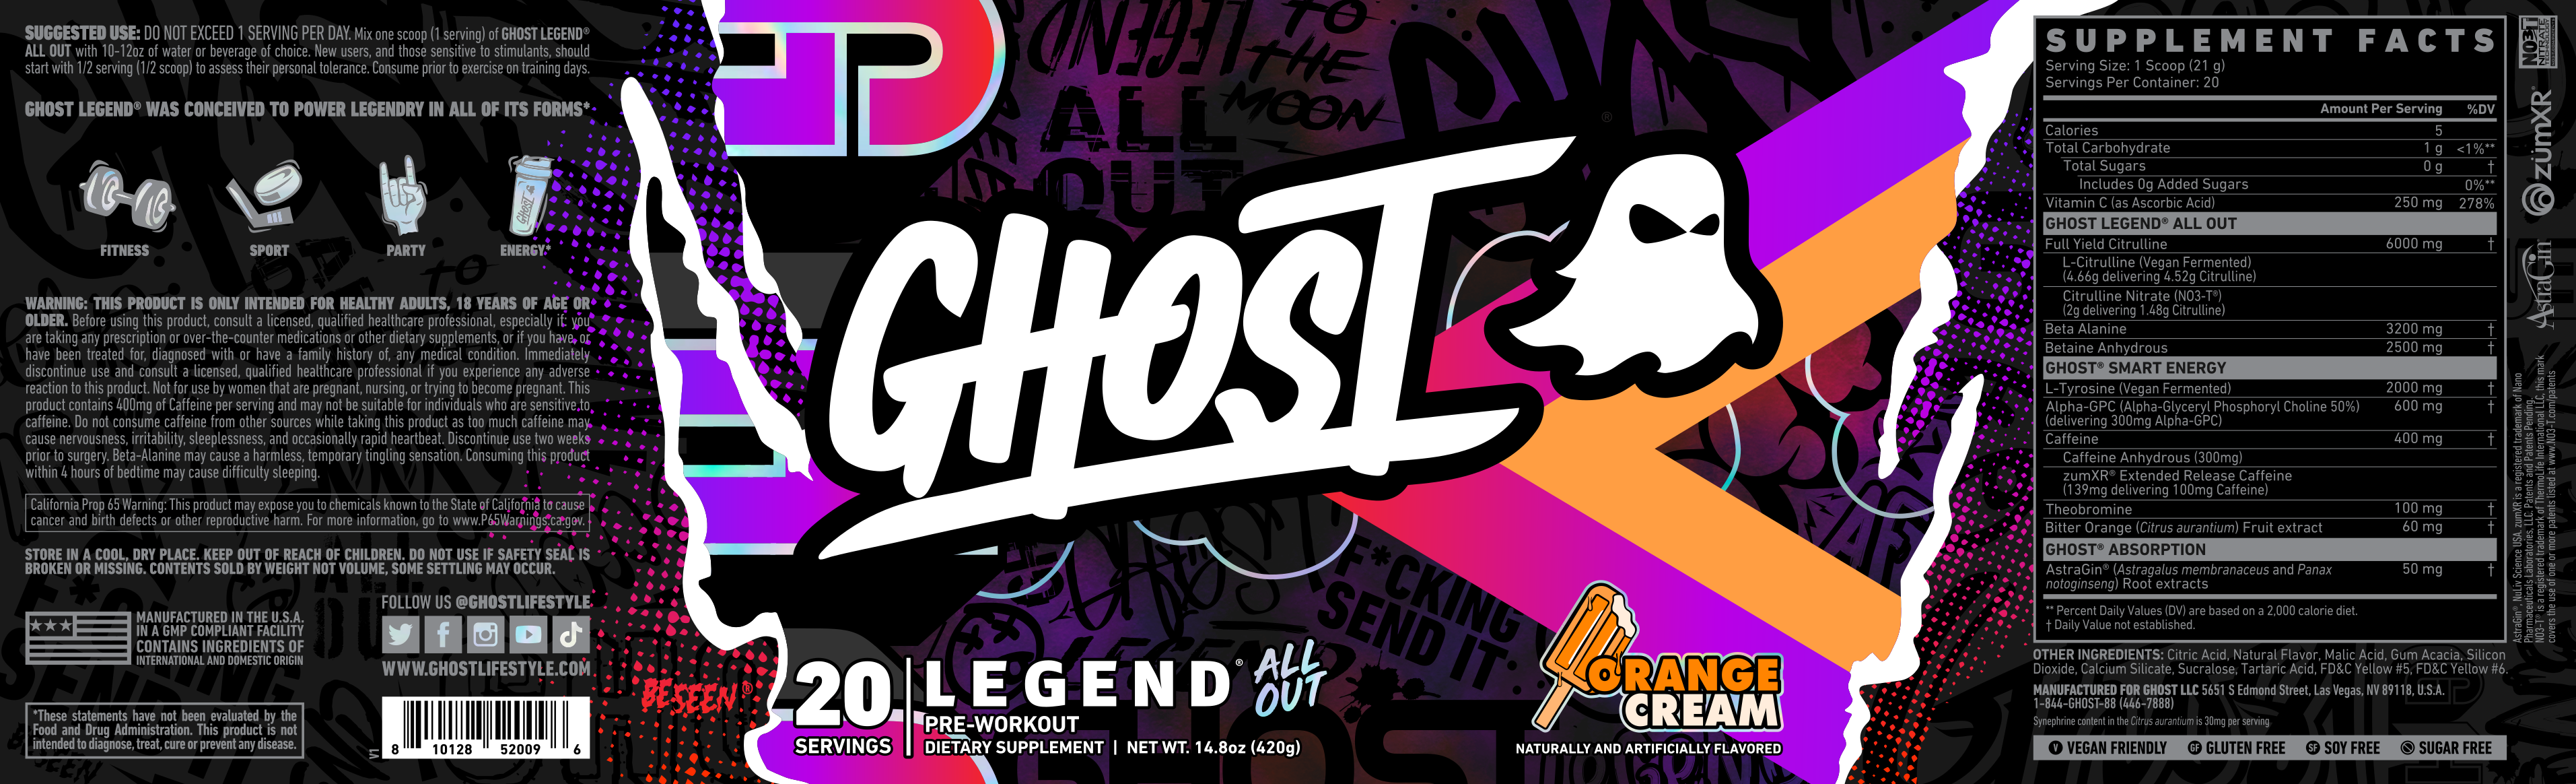 Ghost Legend All Out Orange Cream Label